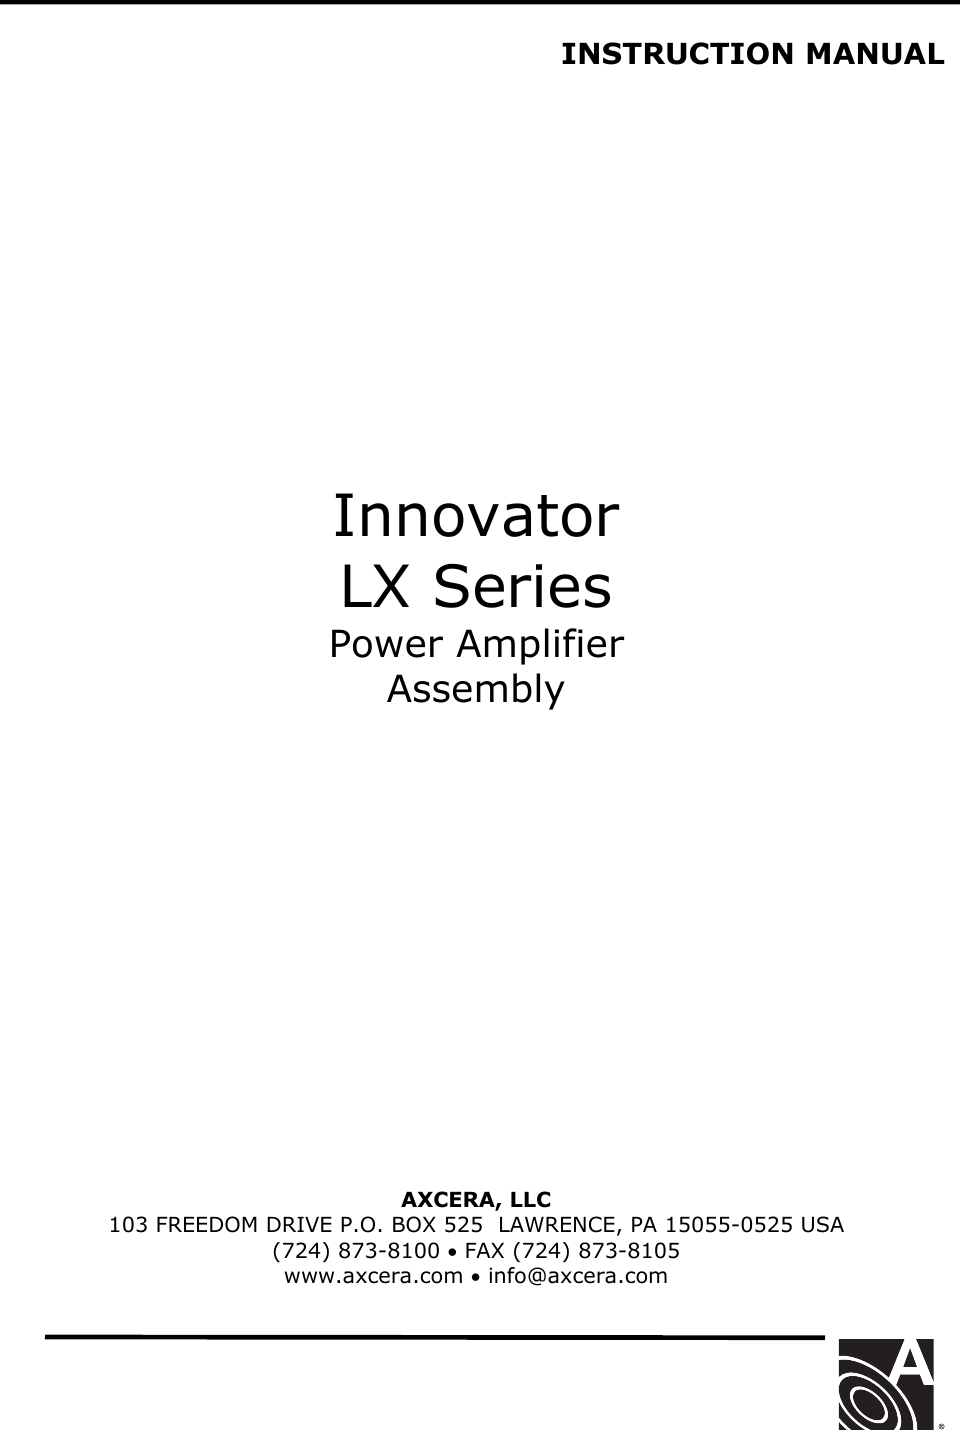   INSTRUCTION MANUAL                  Innovator LX Series Power Amplifier Assembly               AXCERA, LLC  103 FREEDOM DRIVE P.O. BOX 525  LAWRENCE, PA 15055-0525 USA (724) 873-8100 • FAX (724) 873-8105 www.axcera.com • info@axcera.com     